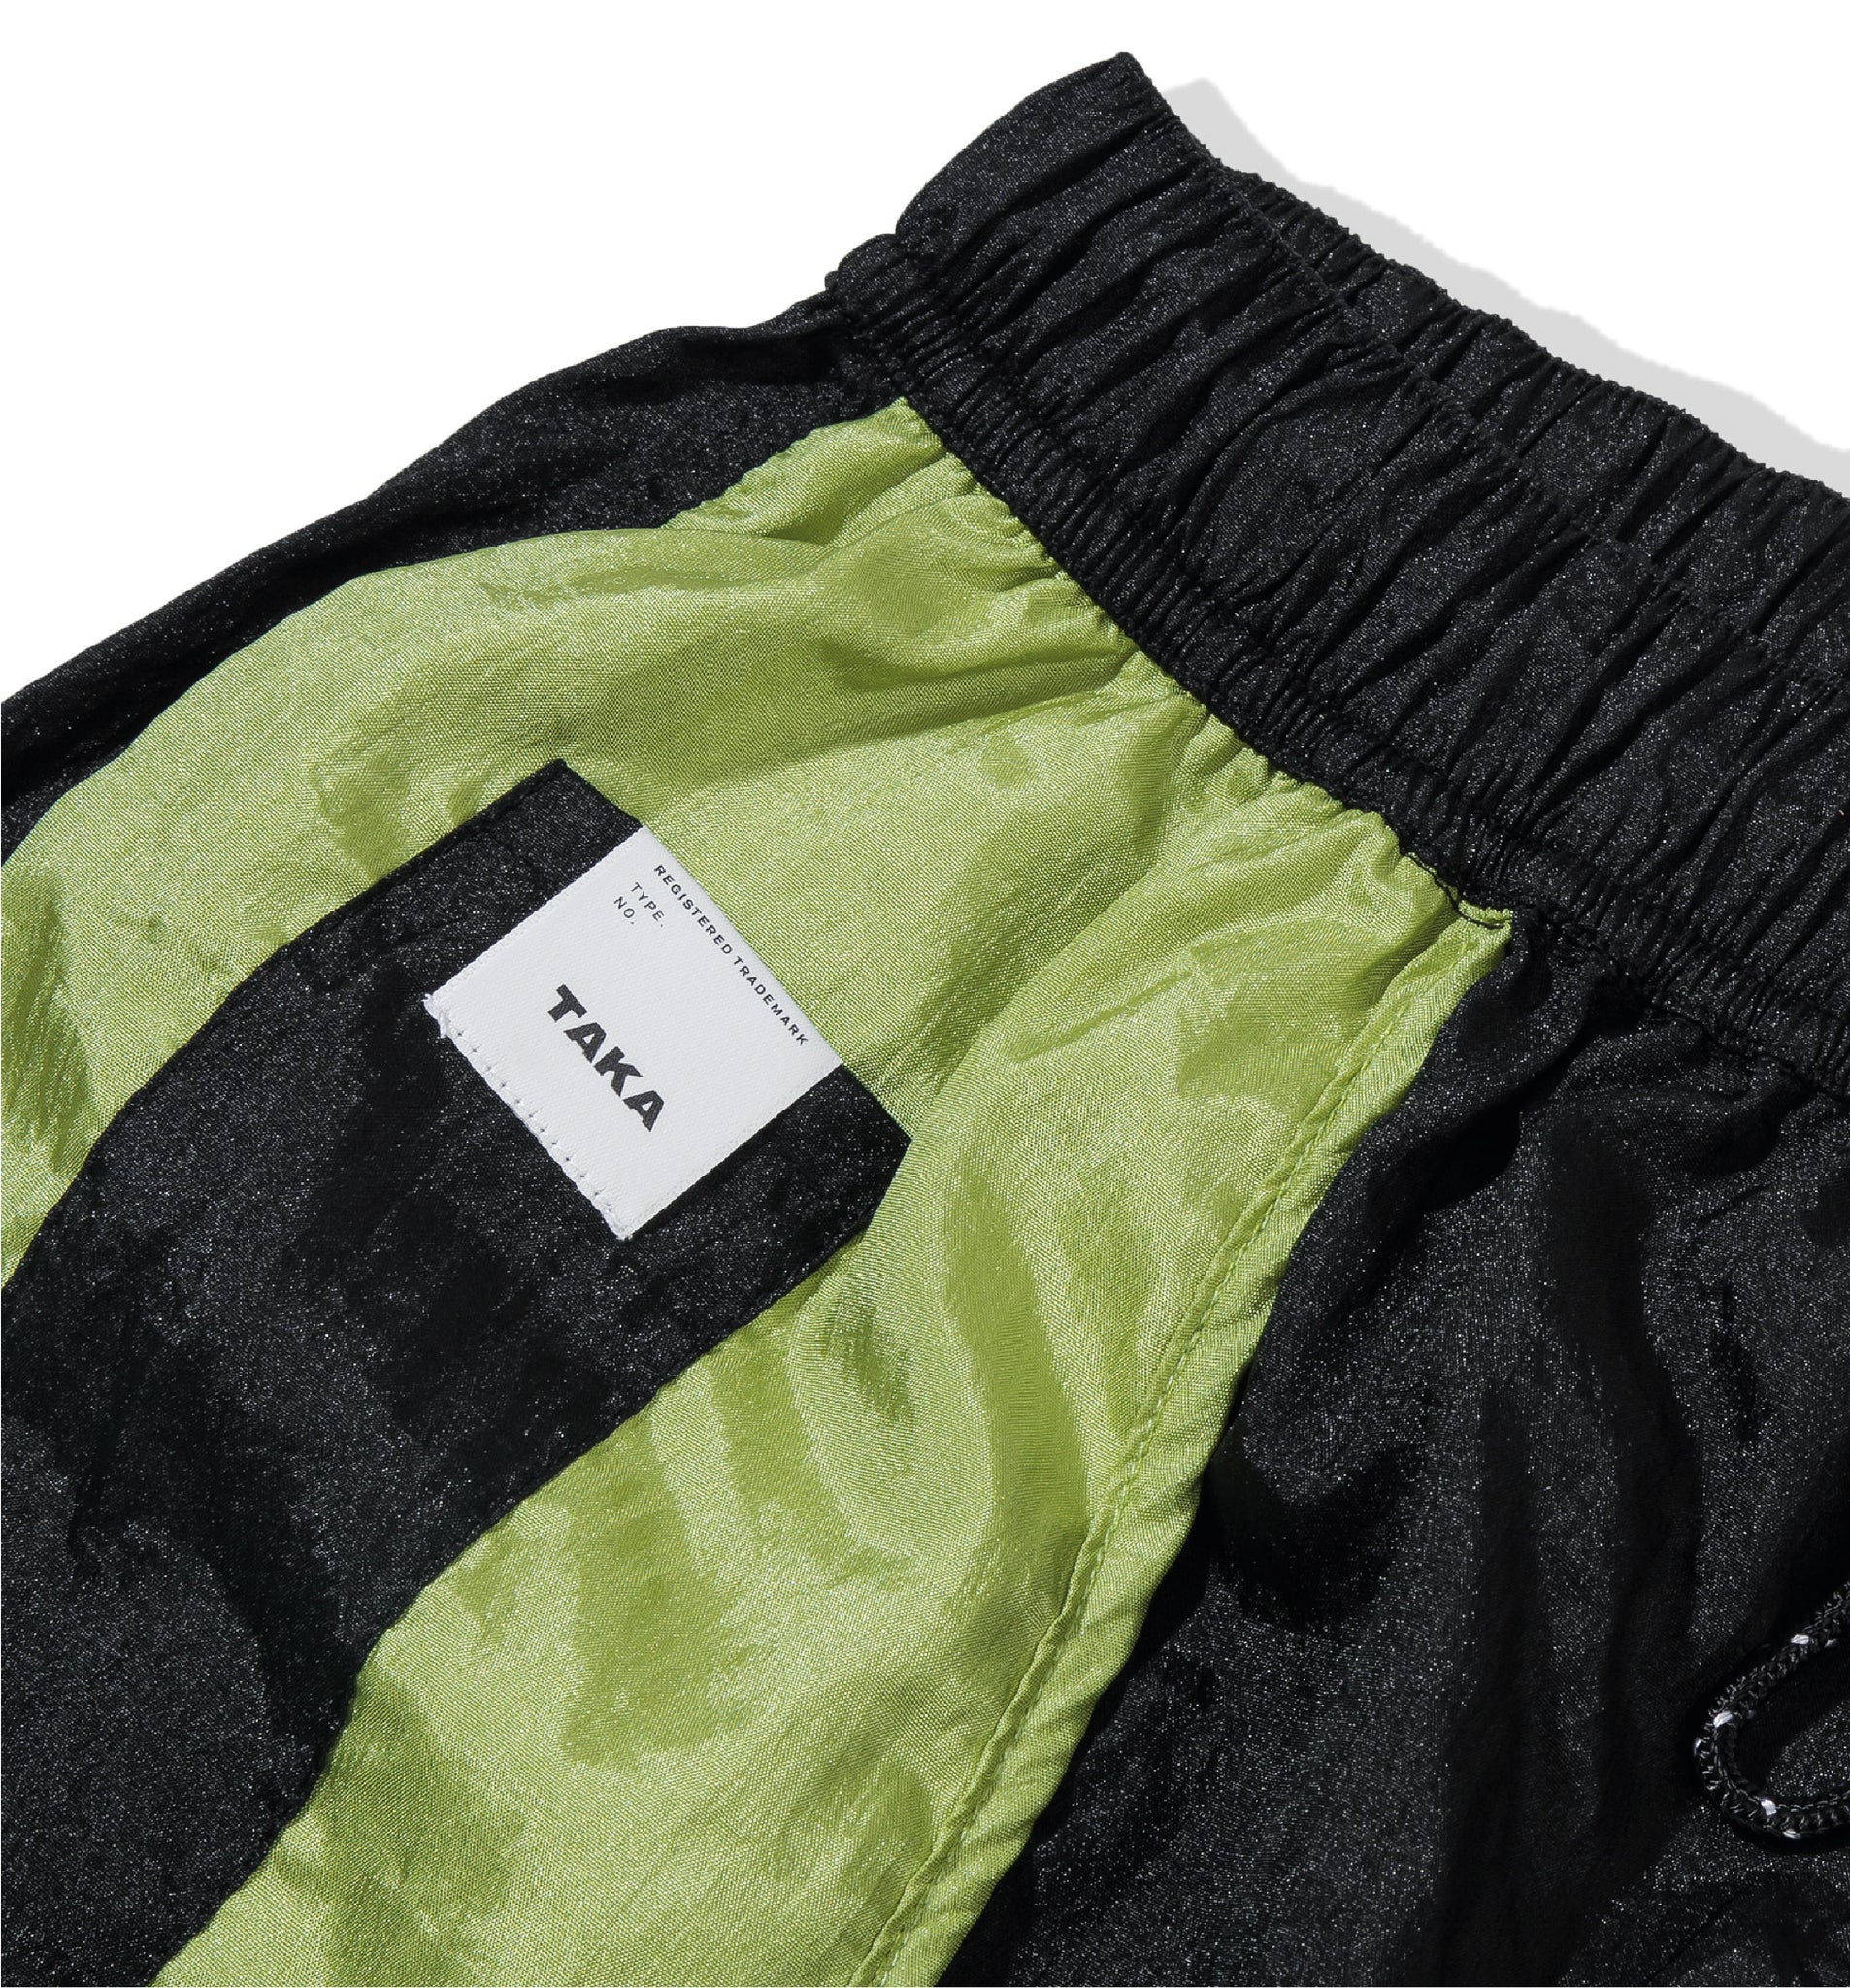 Buggy Nylon Shorts Womens Black Lime